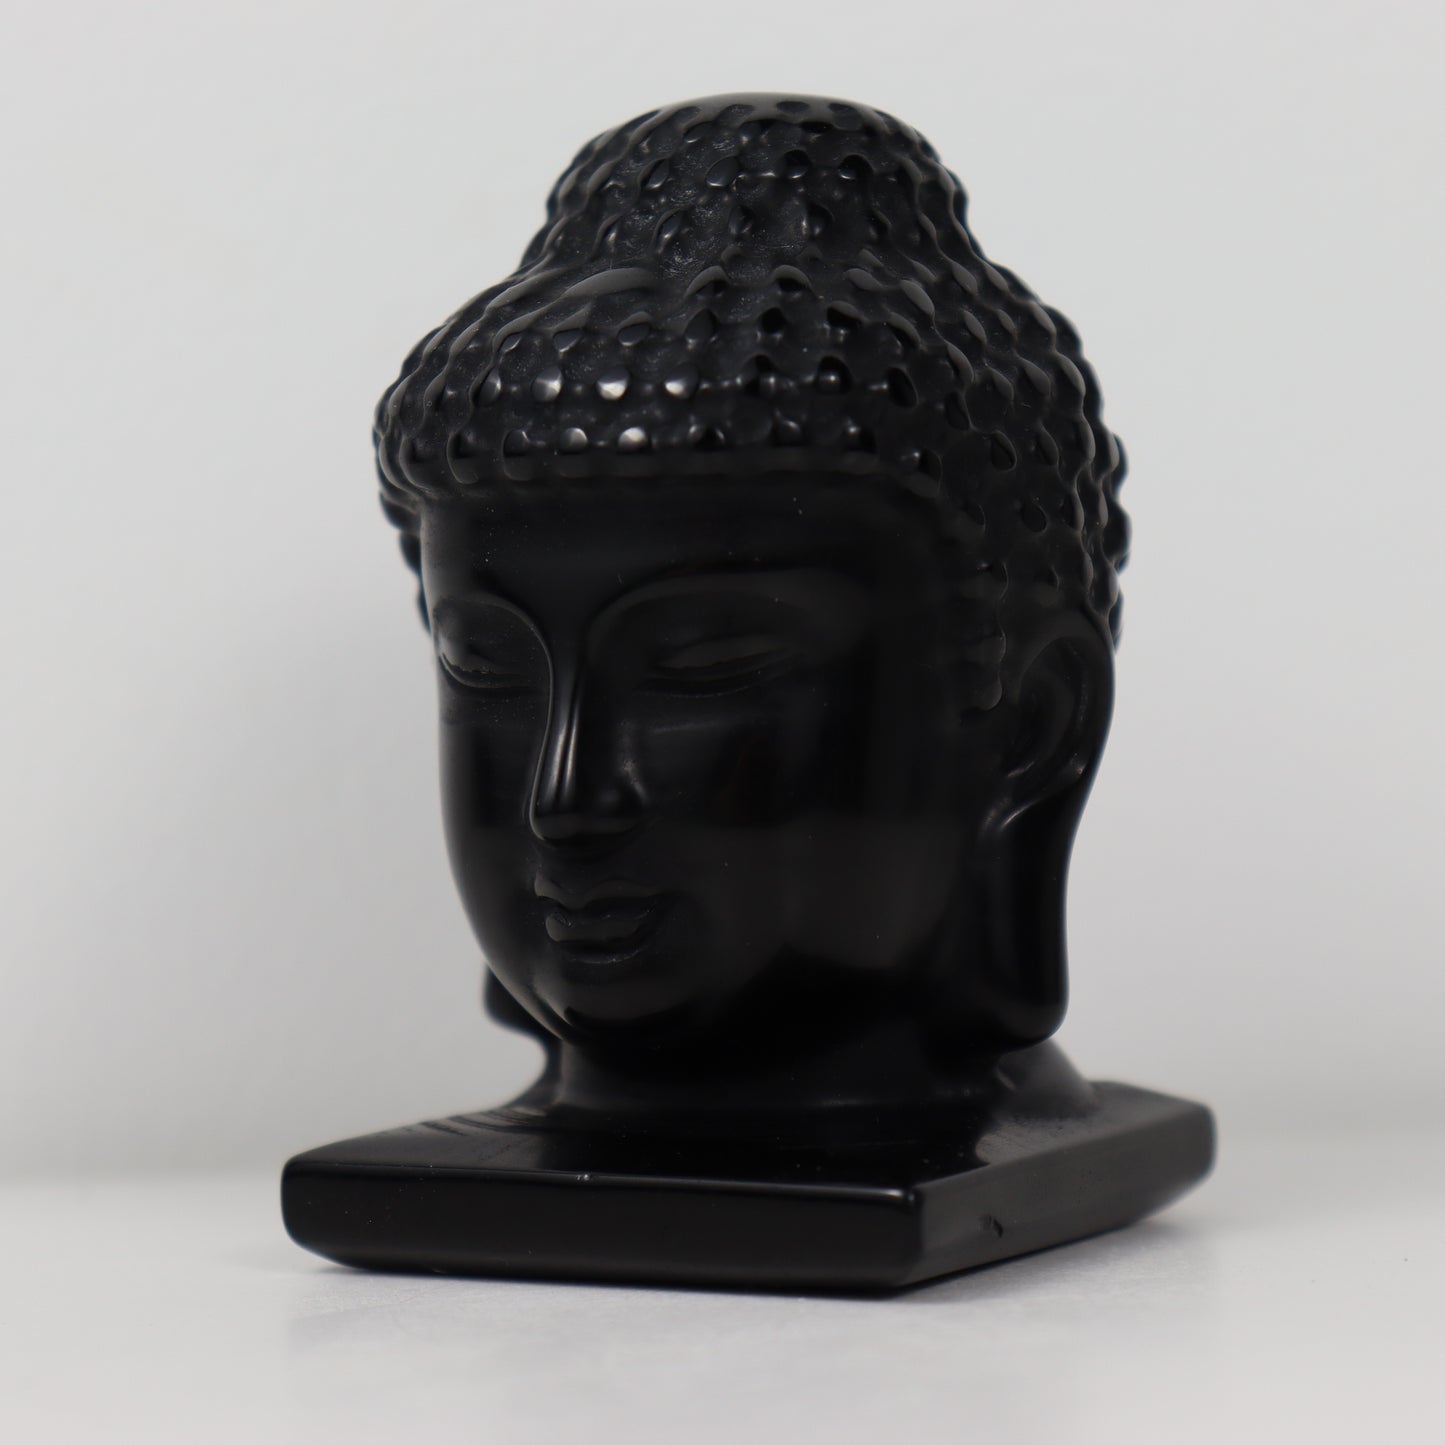 Black Obsidian Buddha Head Carving